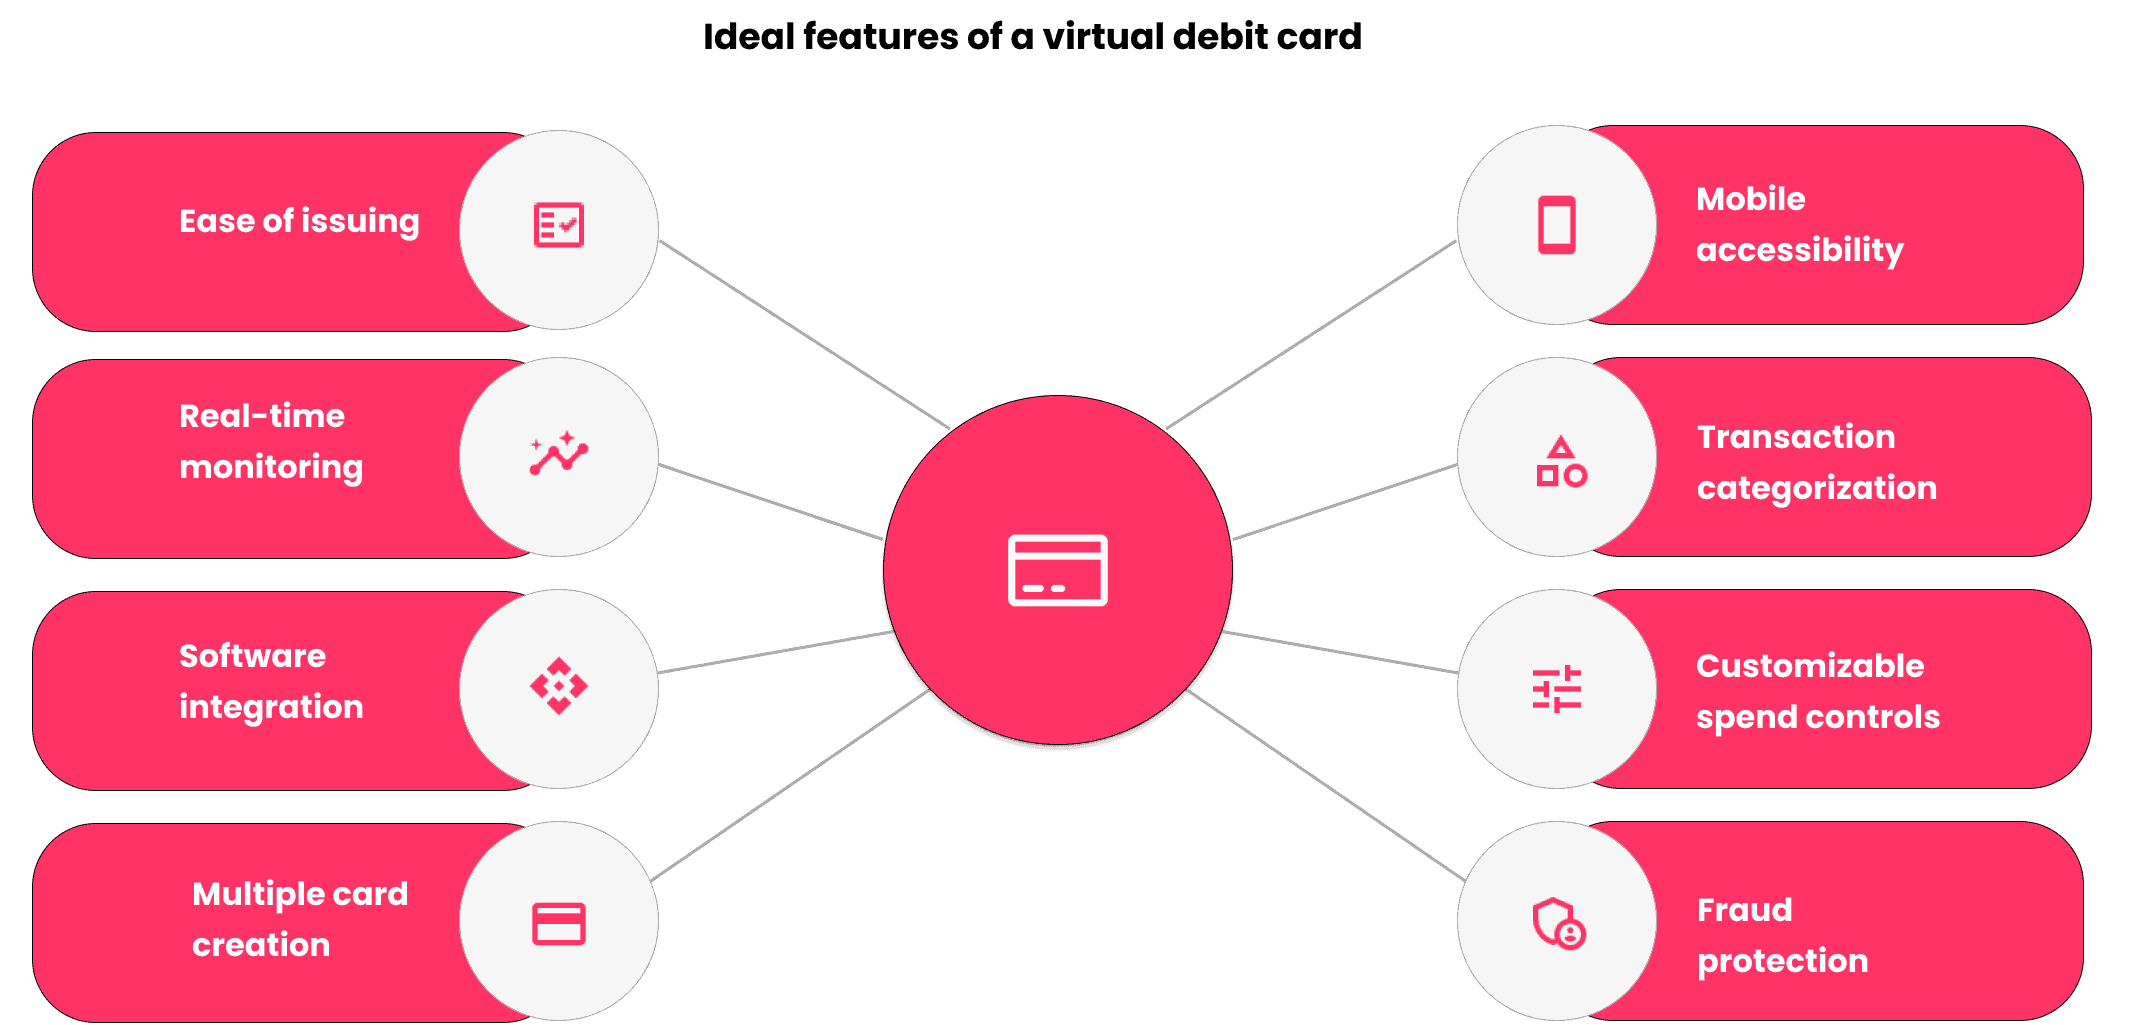 Virtual debit card features